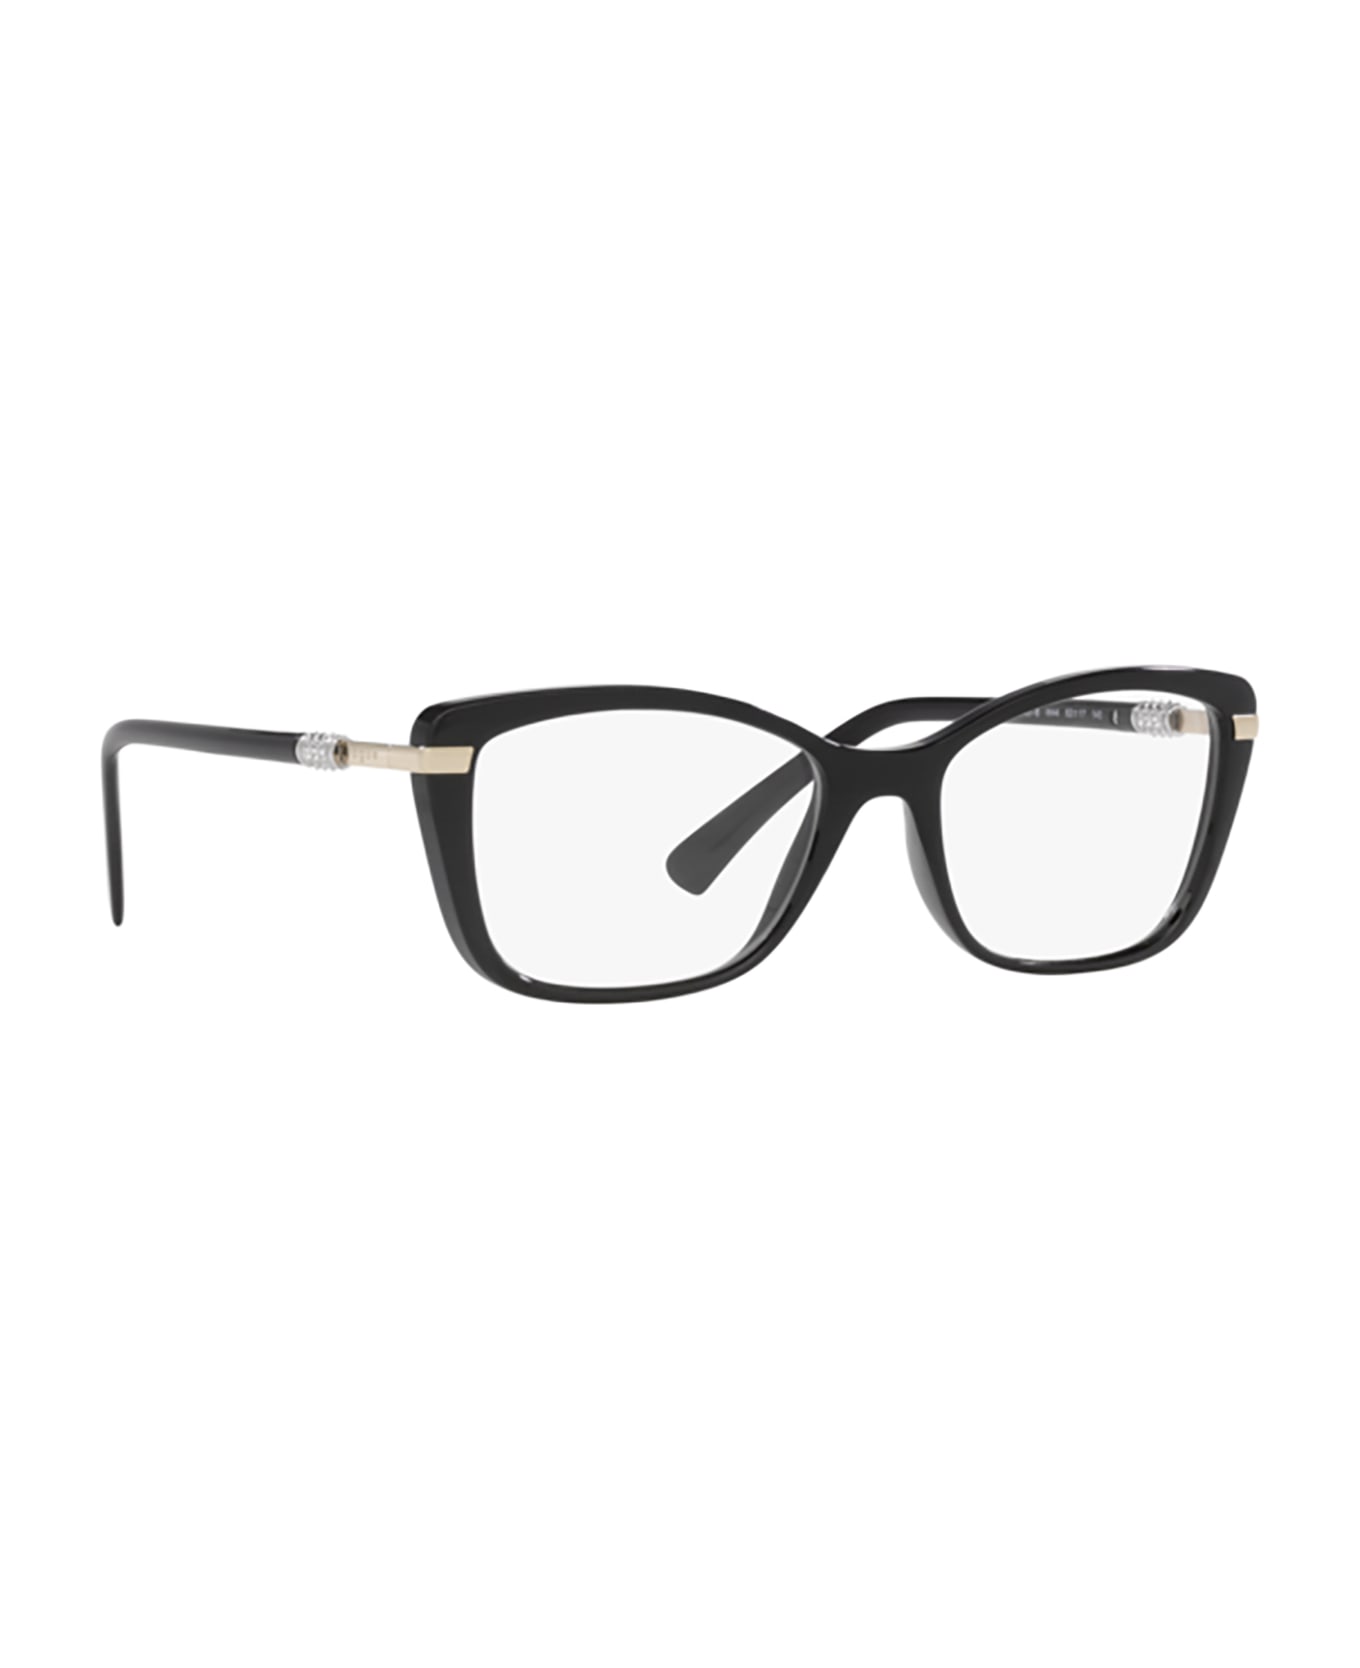 Vogue Eyewear Vo5487b Black Glasses - Black